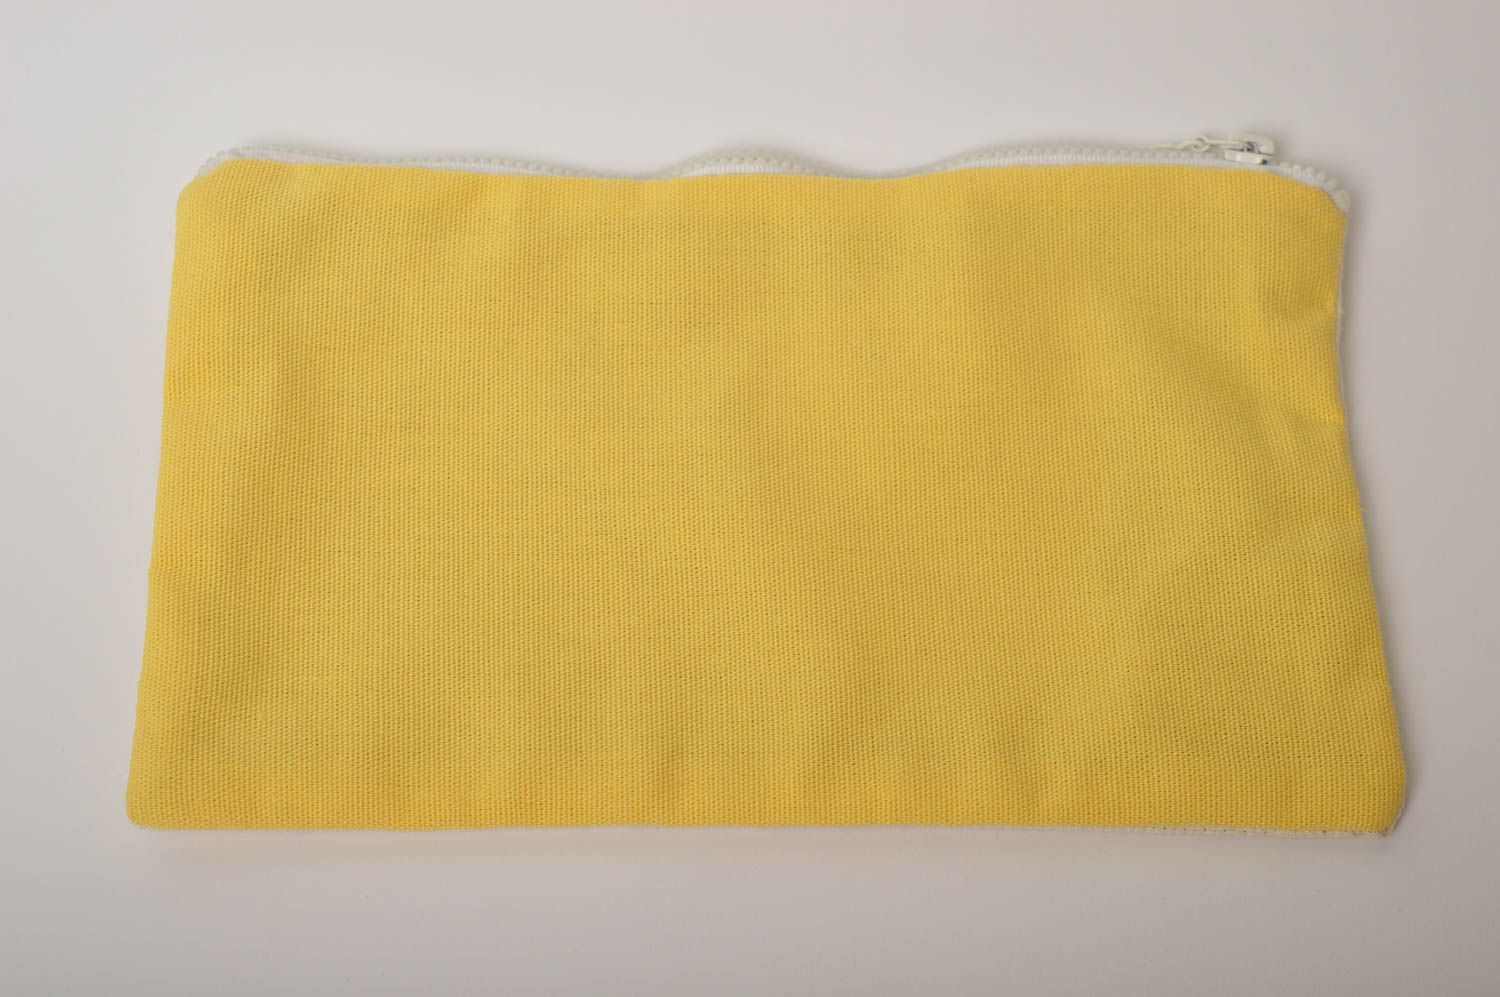 Unusual little bag designer yellow beautician stylish beautiful accessories photo 4